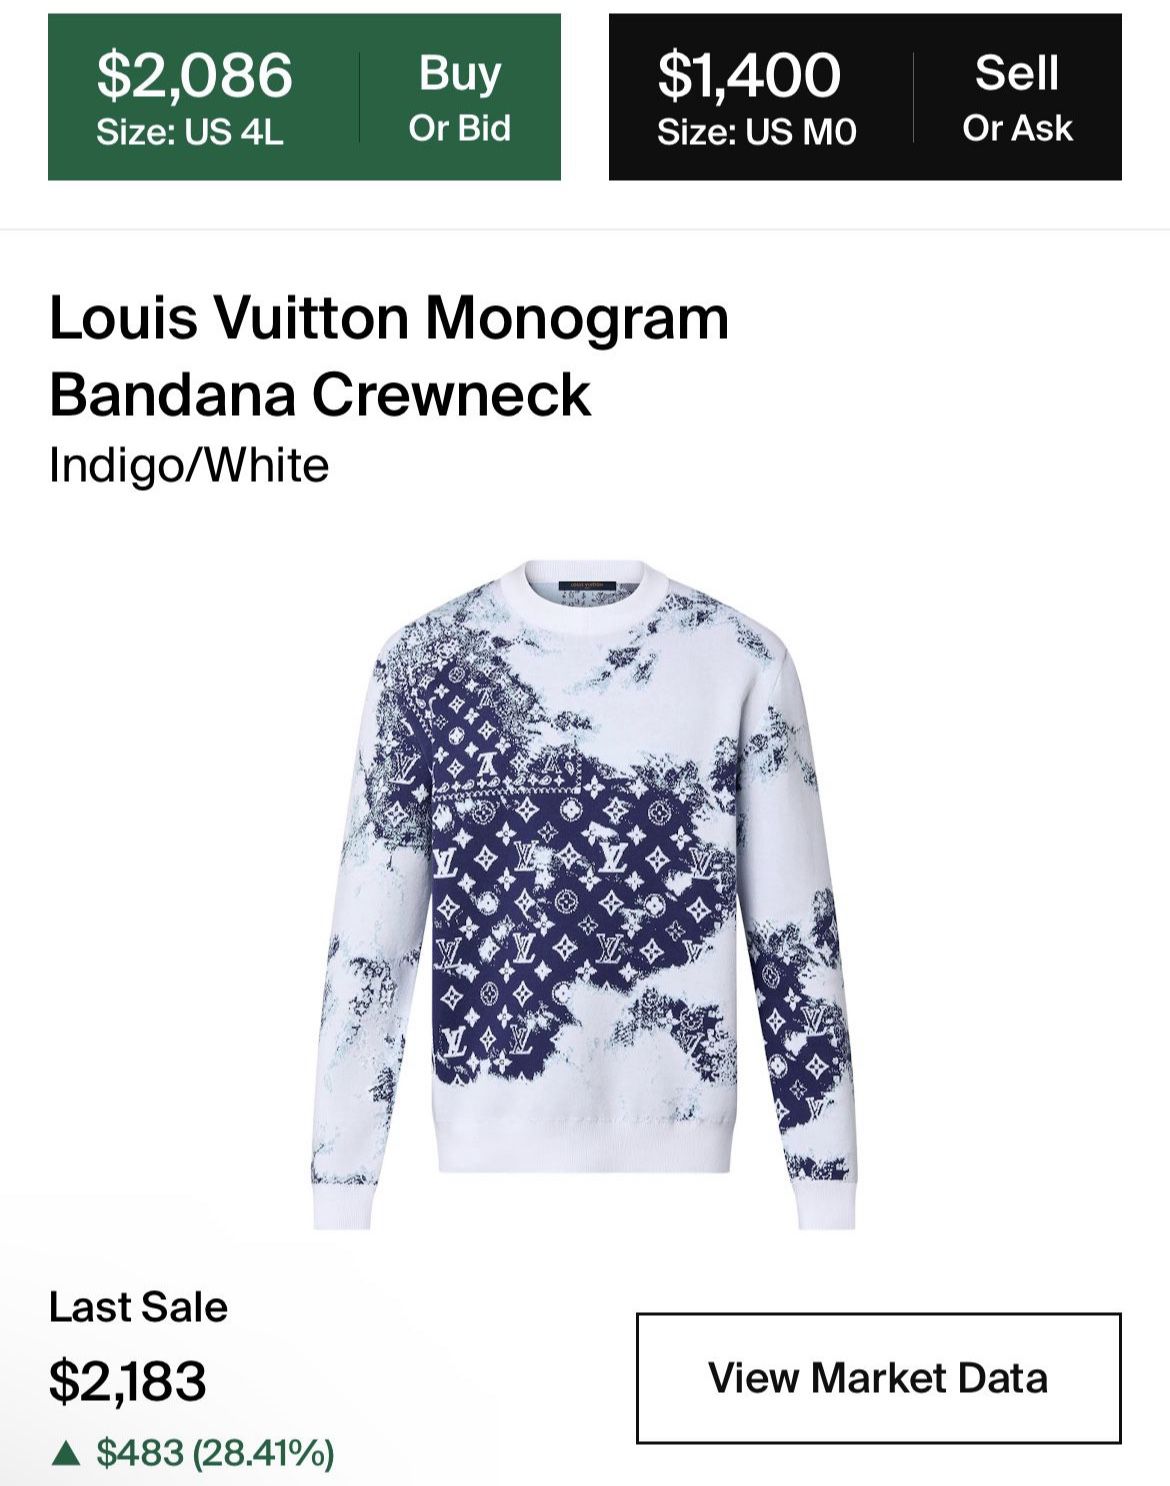 Louis Vuitton Monogram Bandana Crewneck